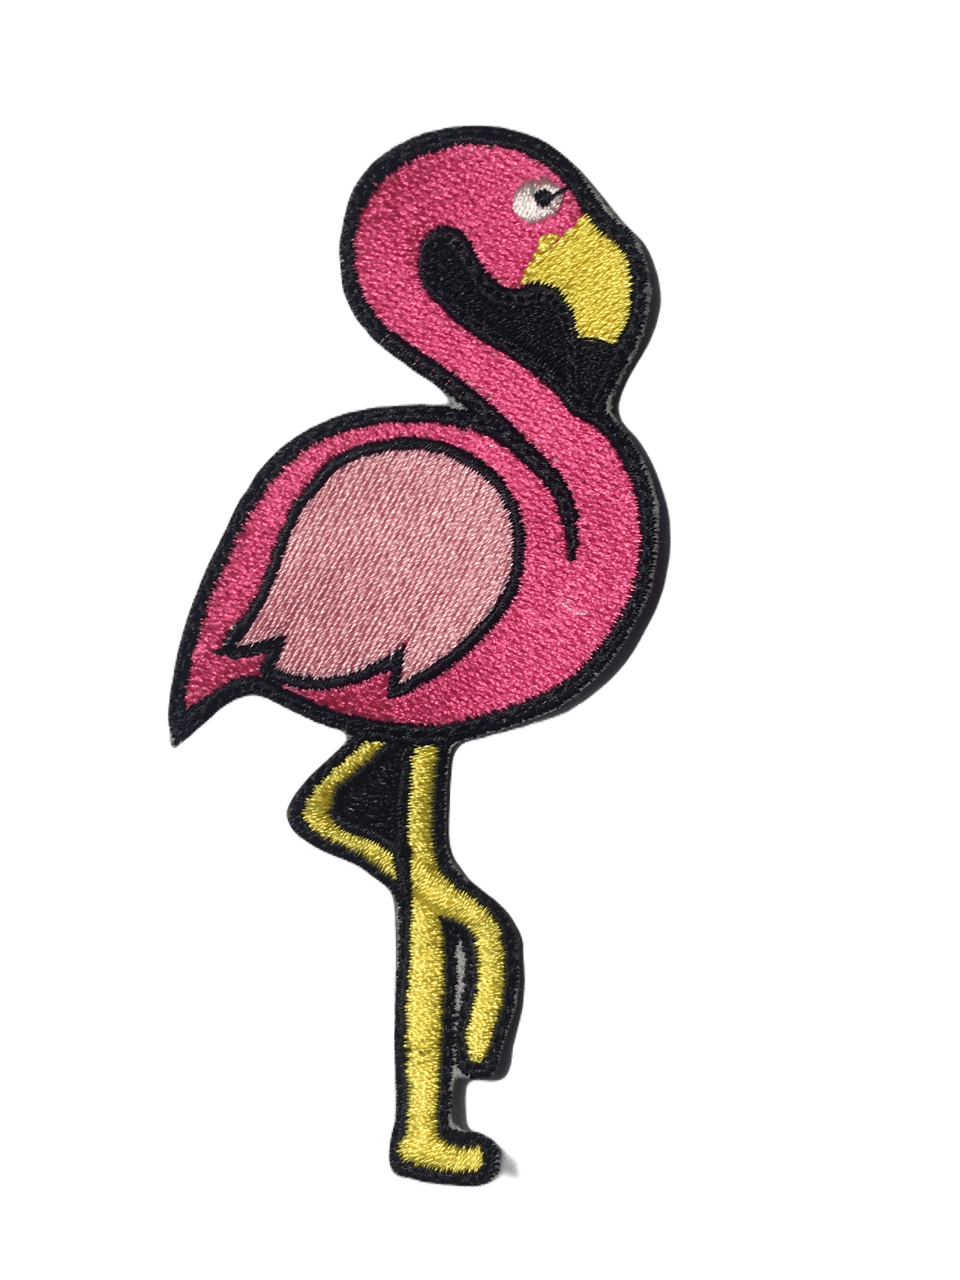 Parche  Bordado 100% Hilo Flamingo  6x6 cms